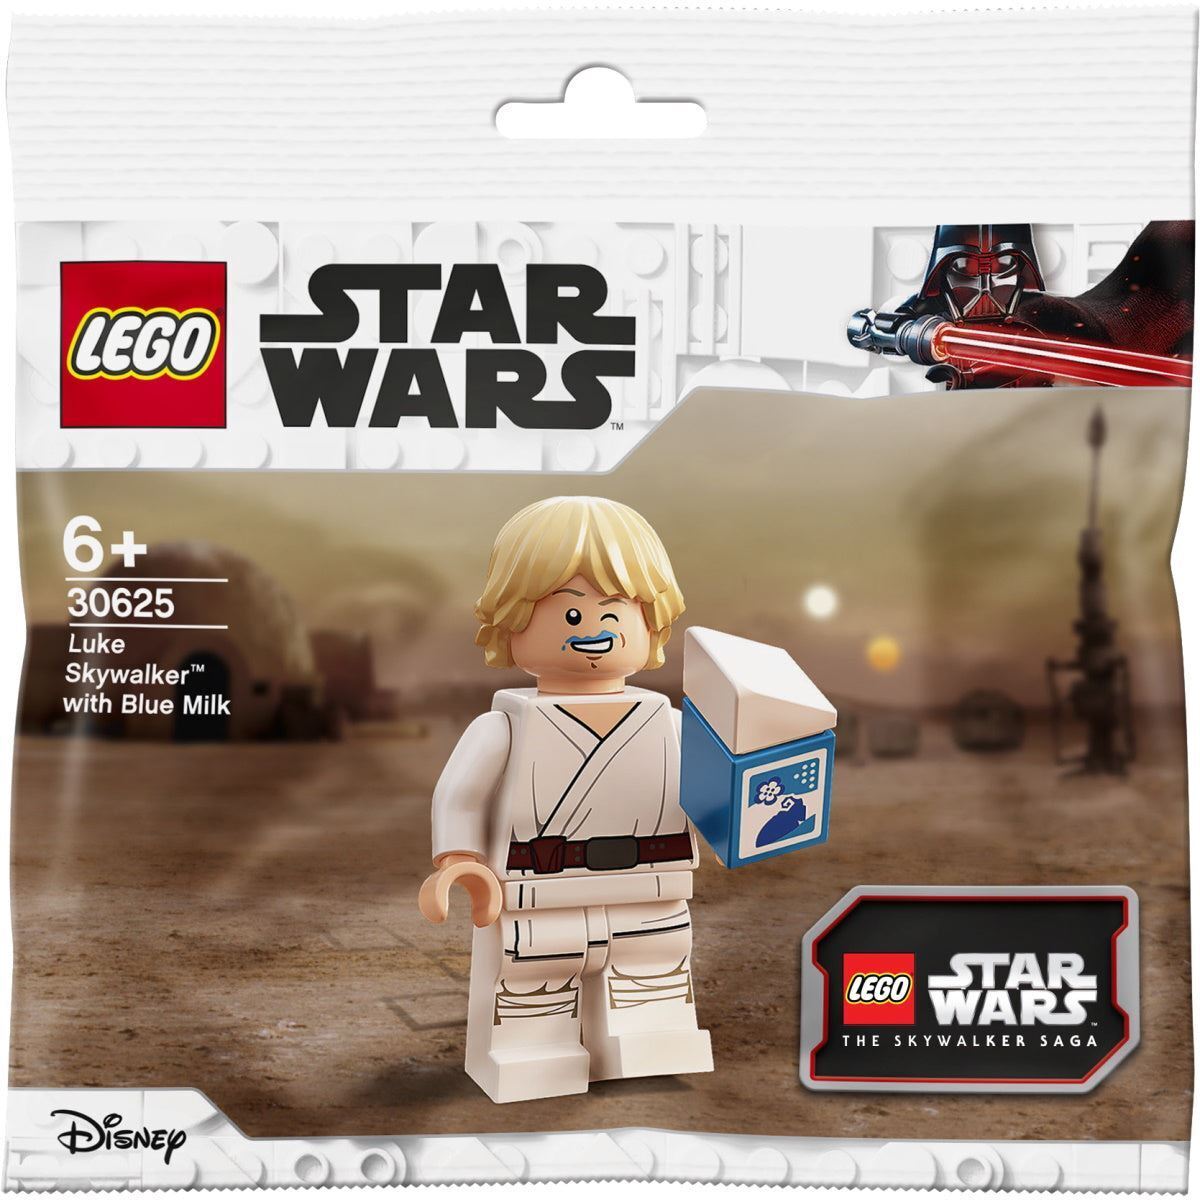 LEGO Star Wars: Luke Skywalker with Blue Milk 30625 - 6 Piece Building Kit [NEW]